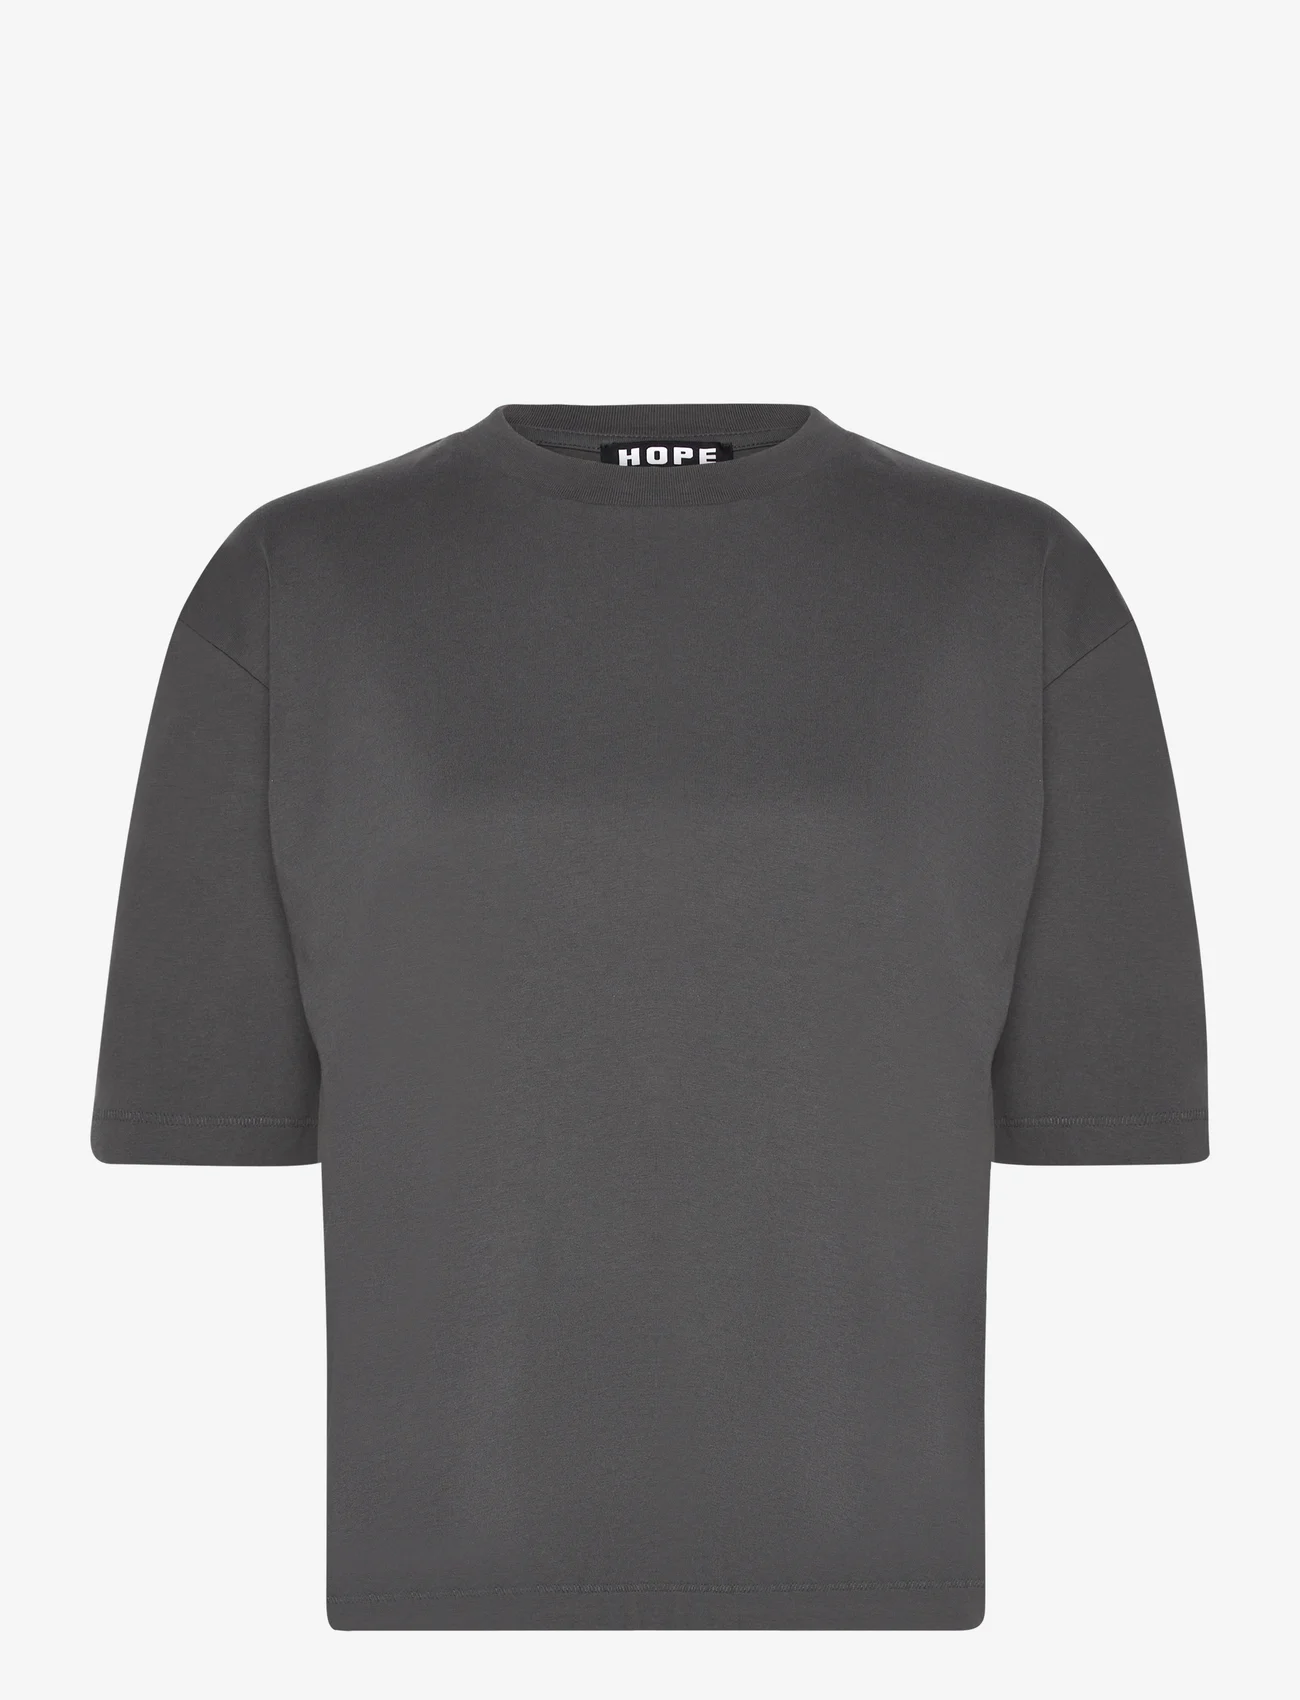 Hope - Boxy T-Shirt - t-skjorter - faded black jersey - 0